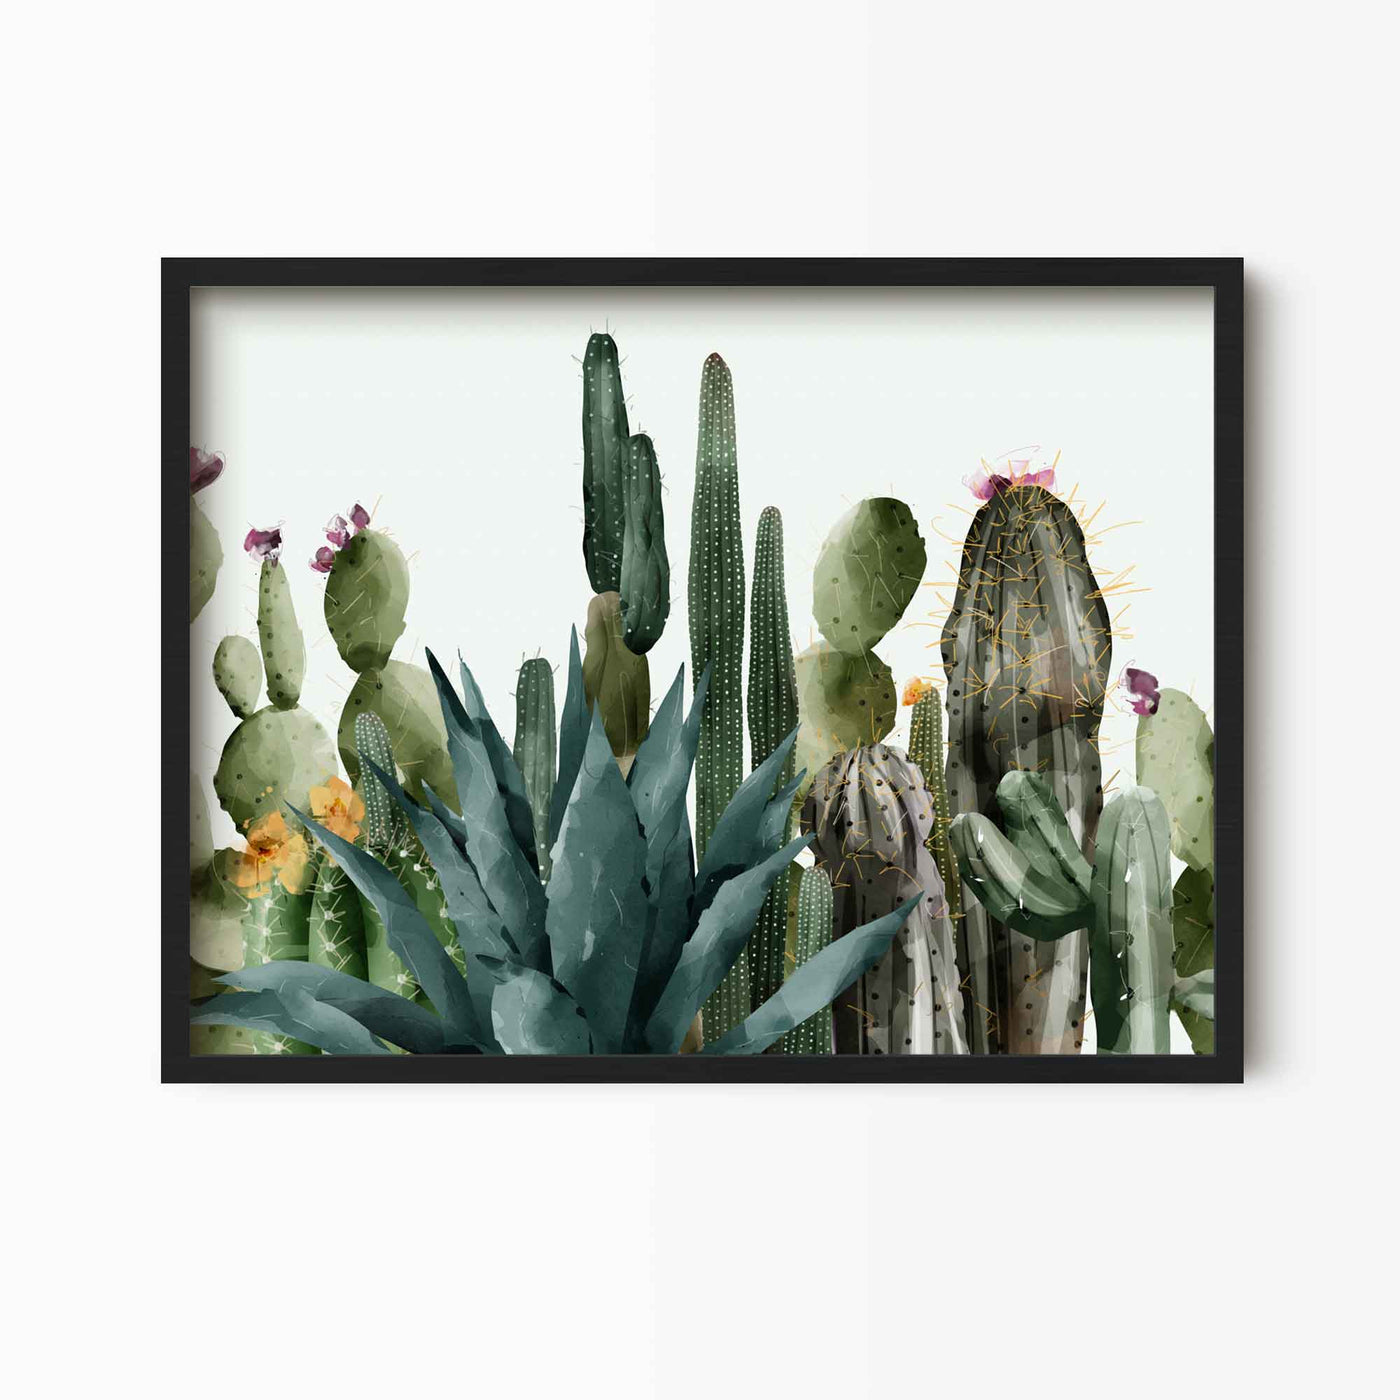 Green Lili 30x40cm (12x16") / Black Frame Cactus Garden Art Print